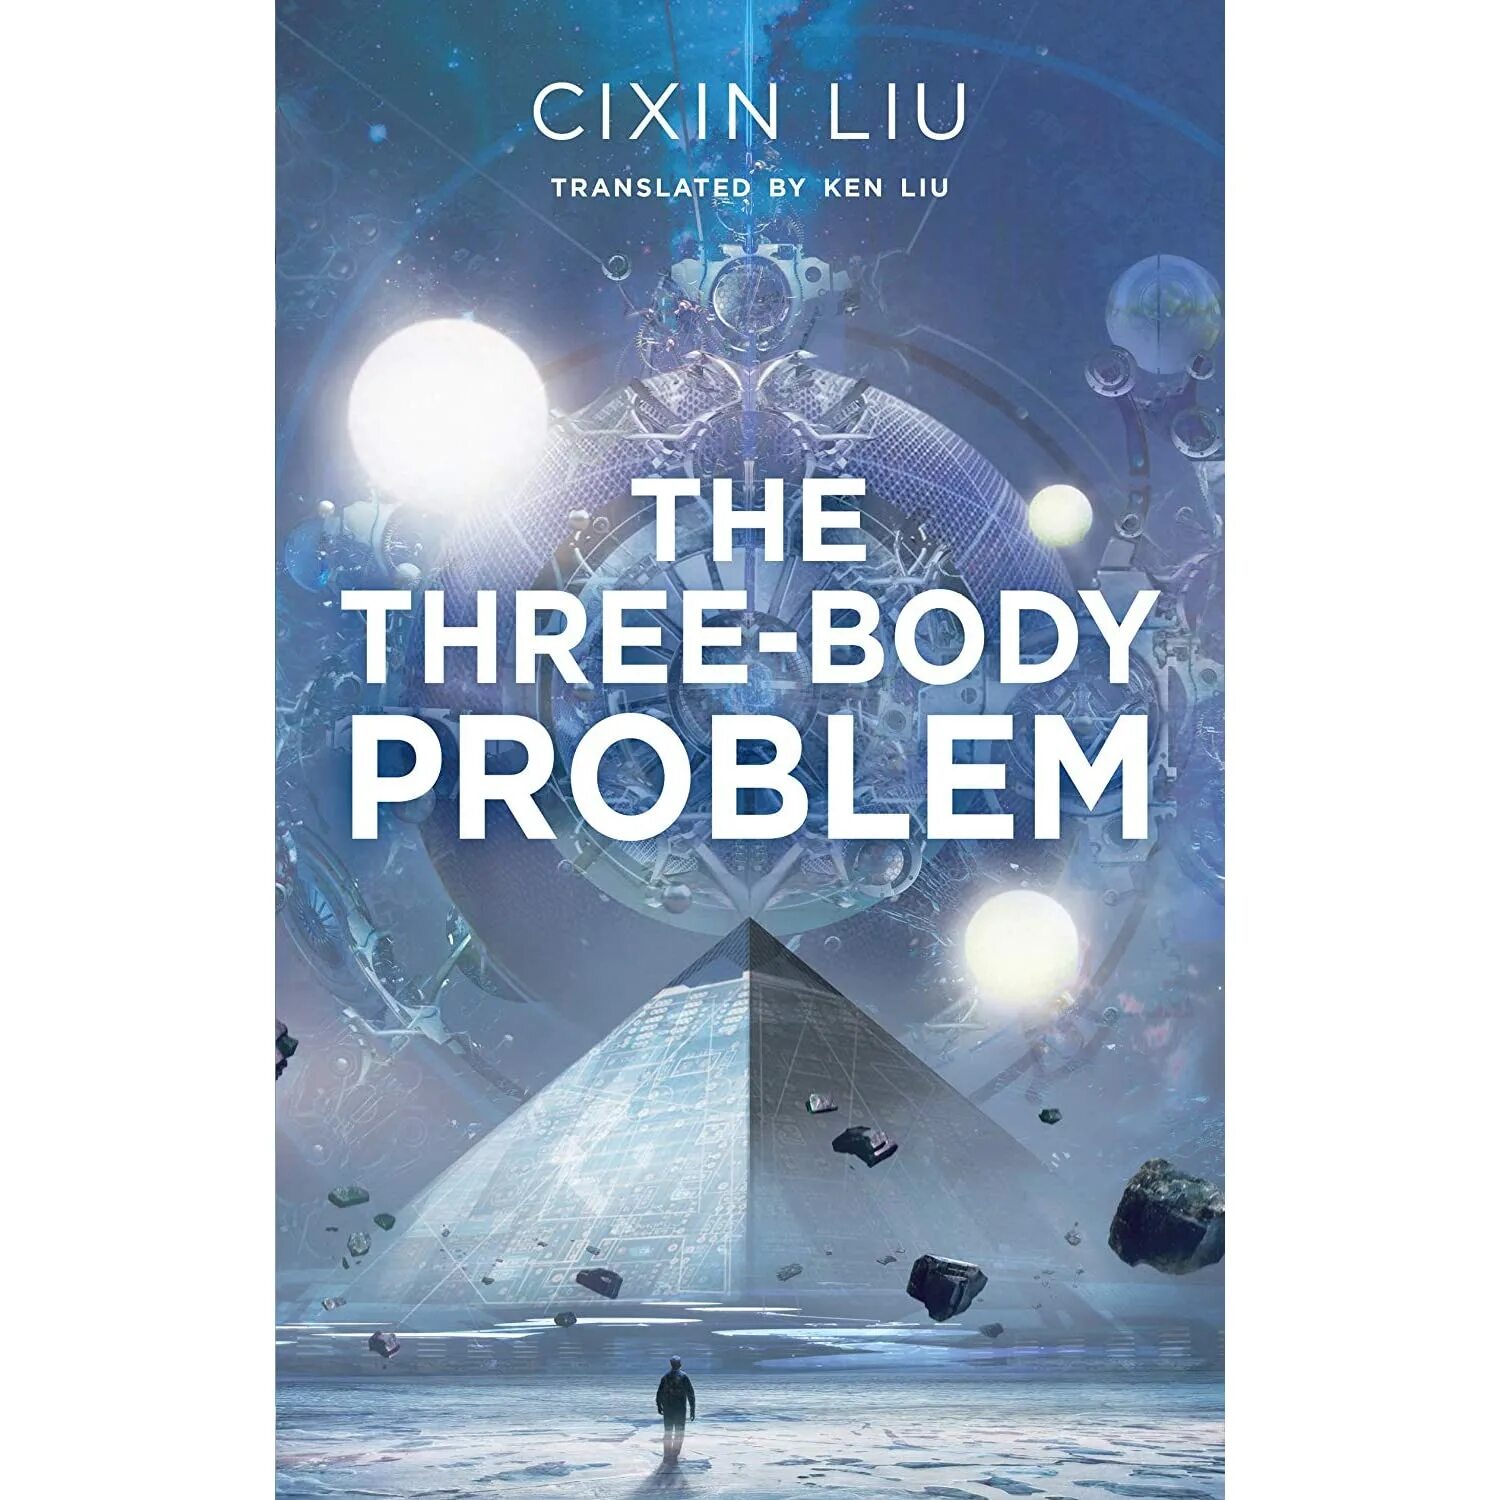 Liu Cixin the three-body problem. Задача трех тел книга. Трисолярис лю Цысинь. Задача трёх тел лю Цысинь книга.